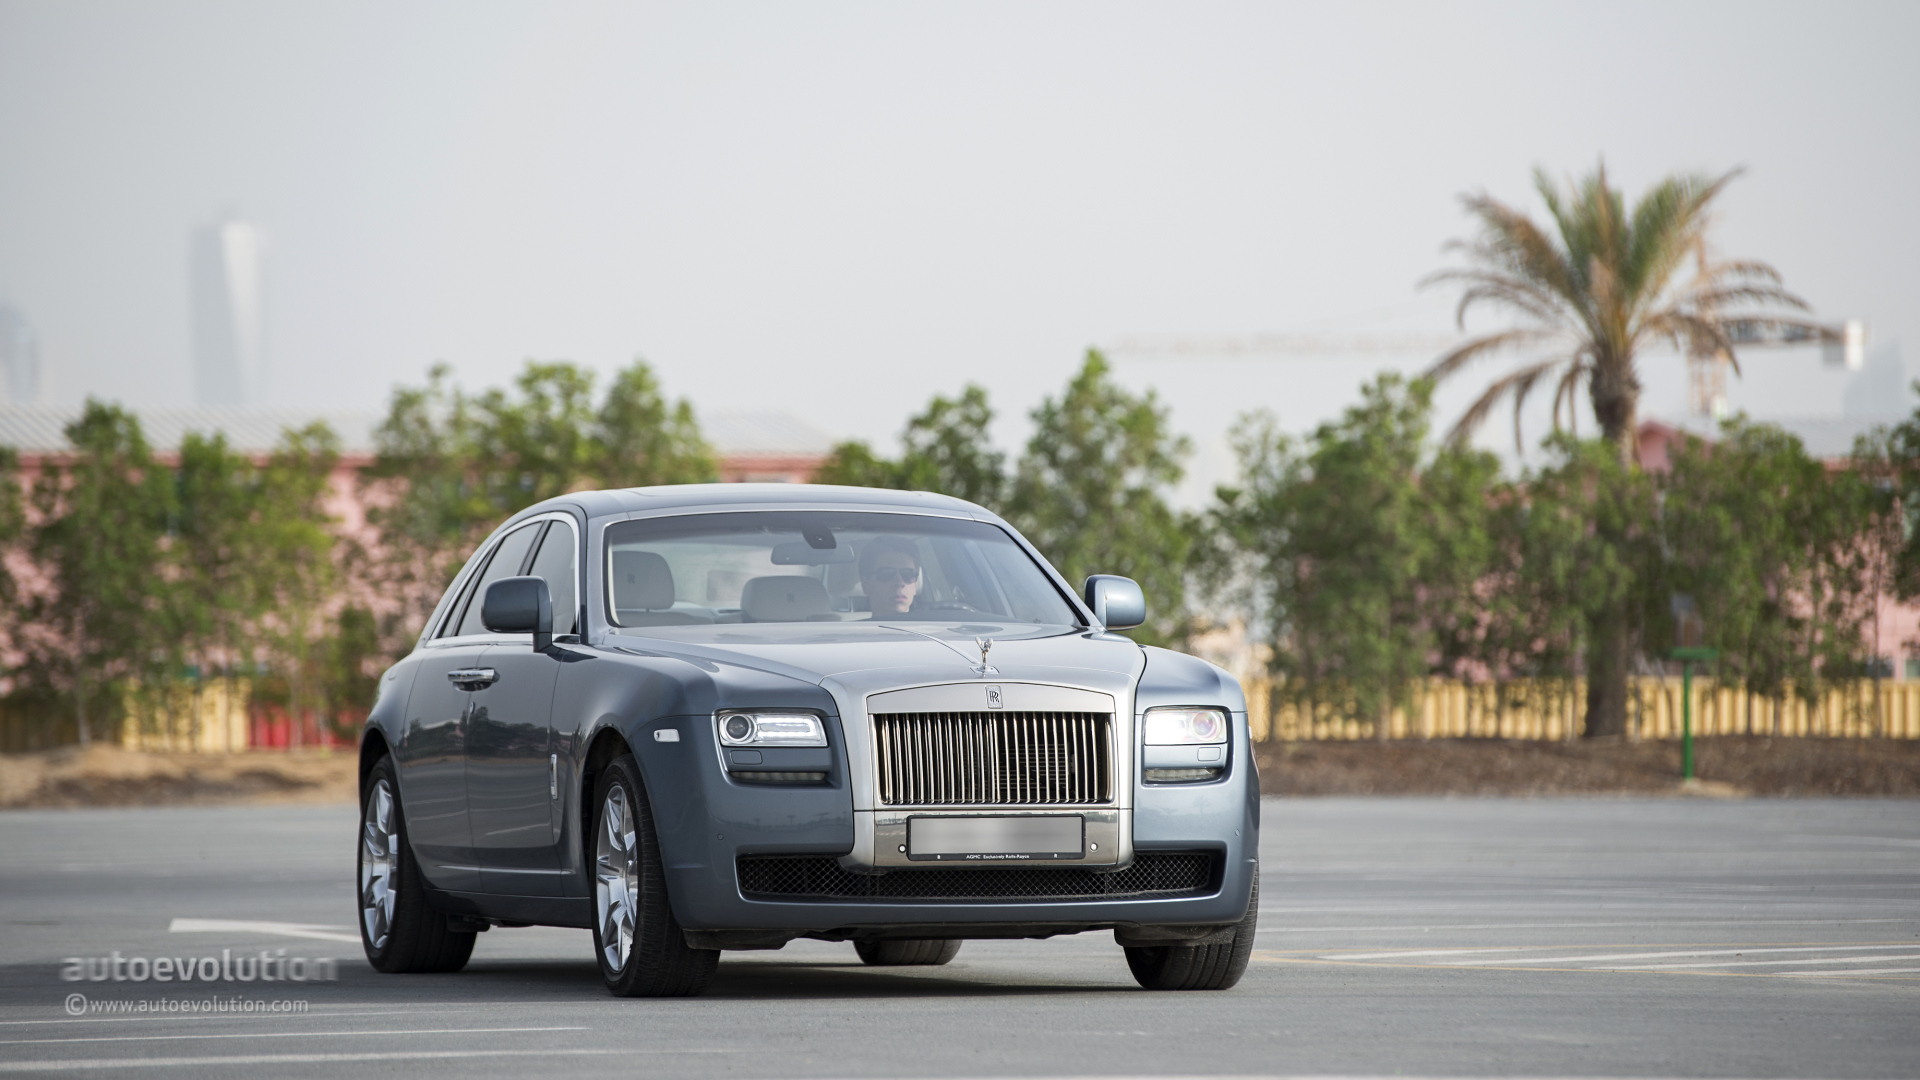 Роллс ройс ремикс. Rolls Royce Ghost 2010. Роллс Ройс Ghost 6.6. Rolls Royce Ghost 6.6 v12 2009. BH 0001 IP Роллс Ройс.